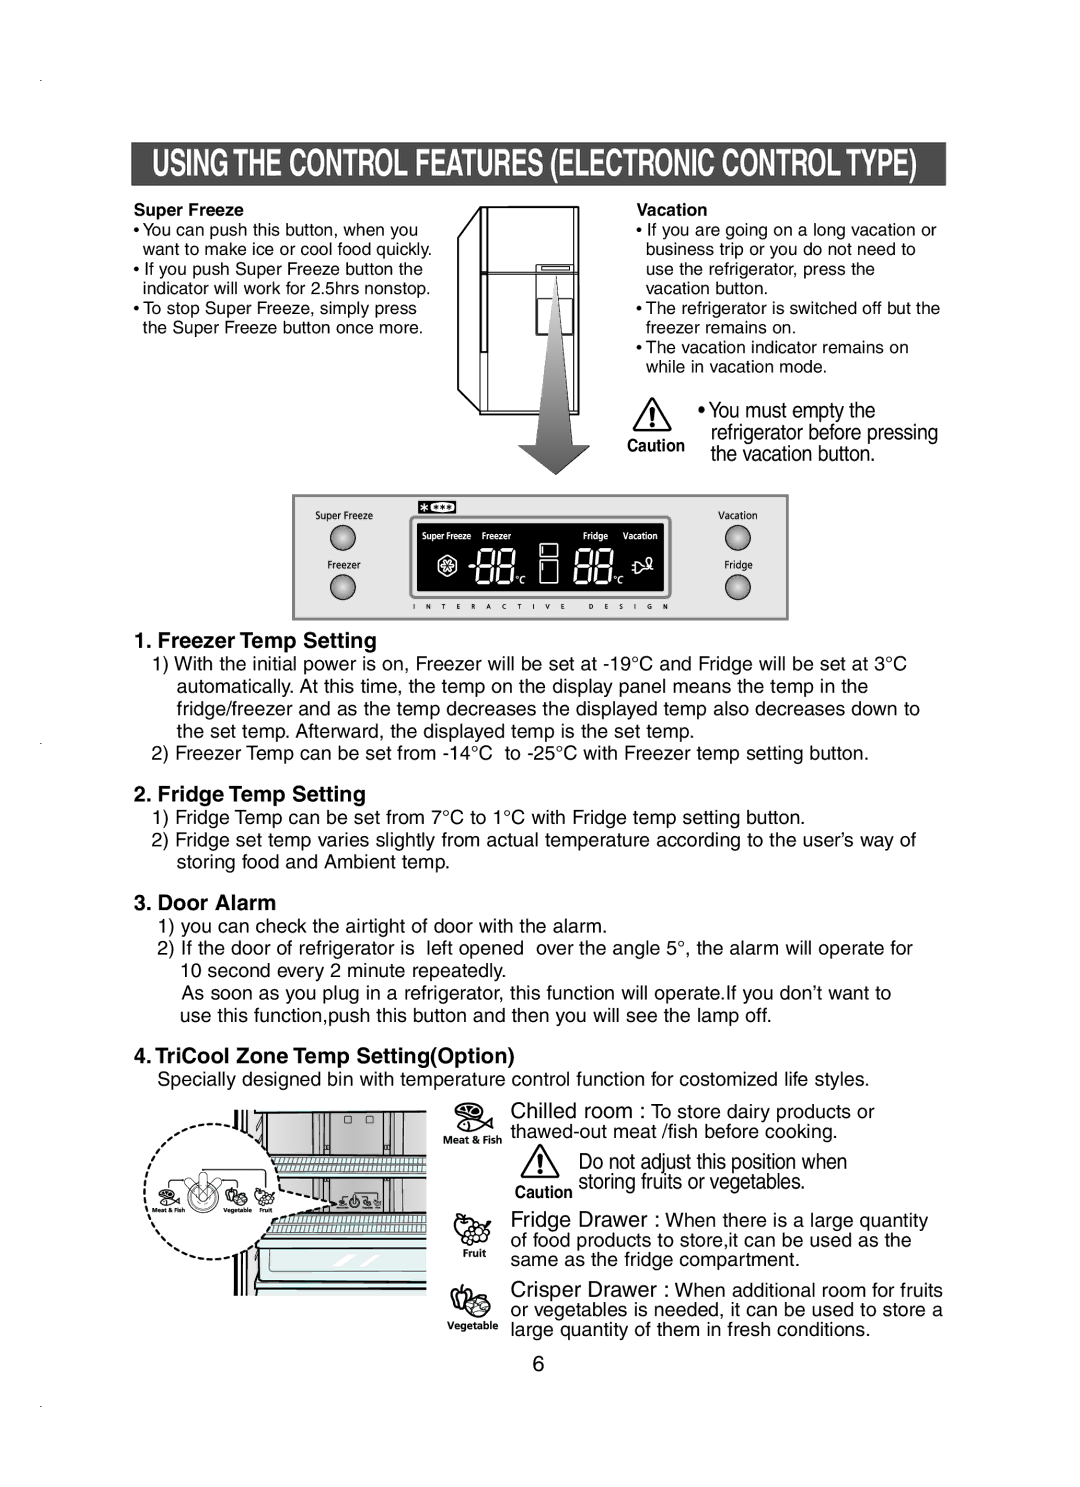 Samsung RT62ZAMT1/XET manual Freezer Temp Setting, Fridge Temp Setting, Door Alarm, TriCool Zone Temp SettingOption 